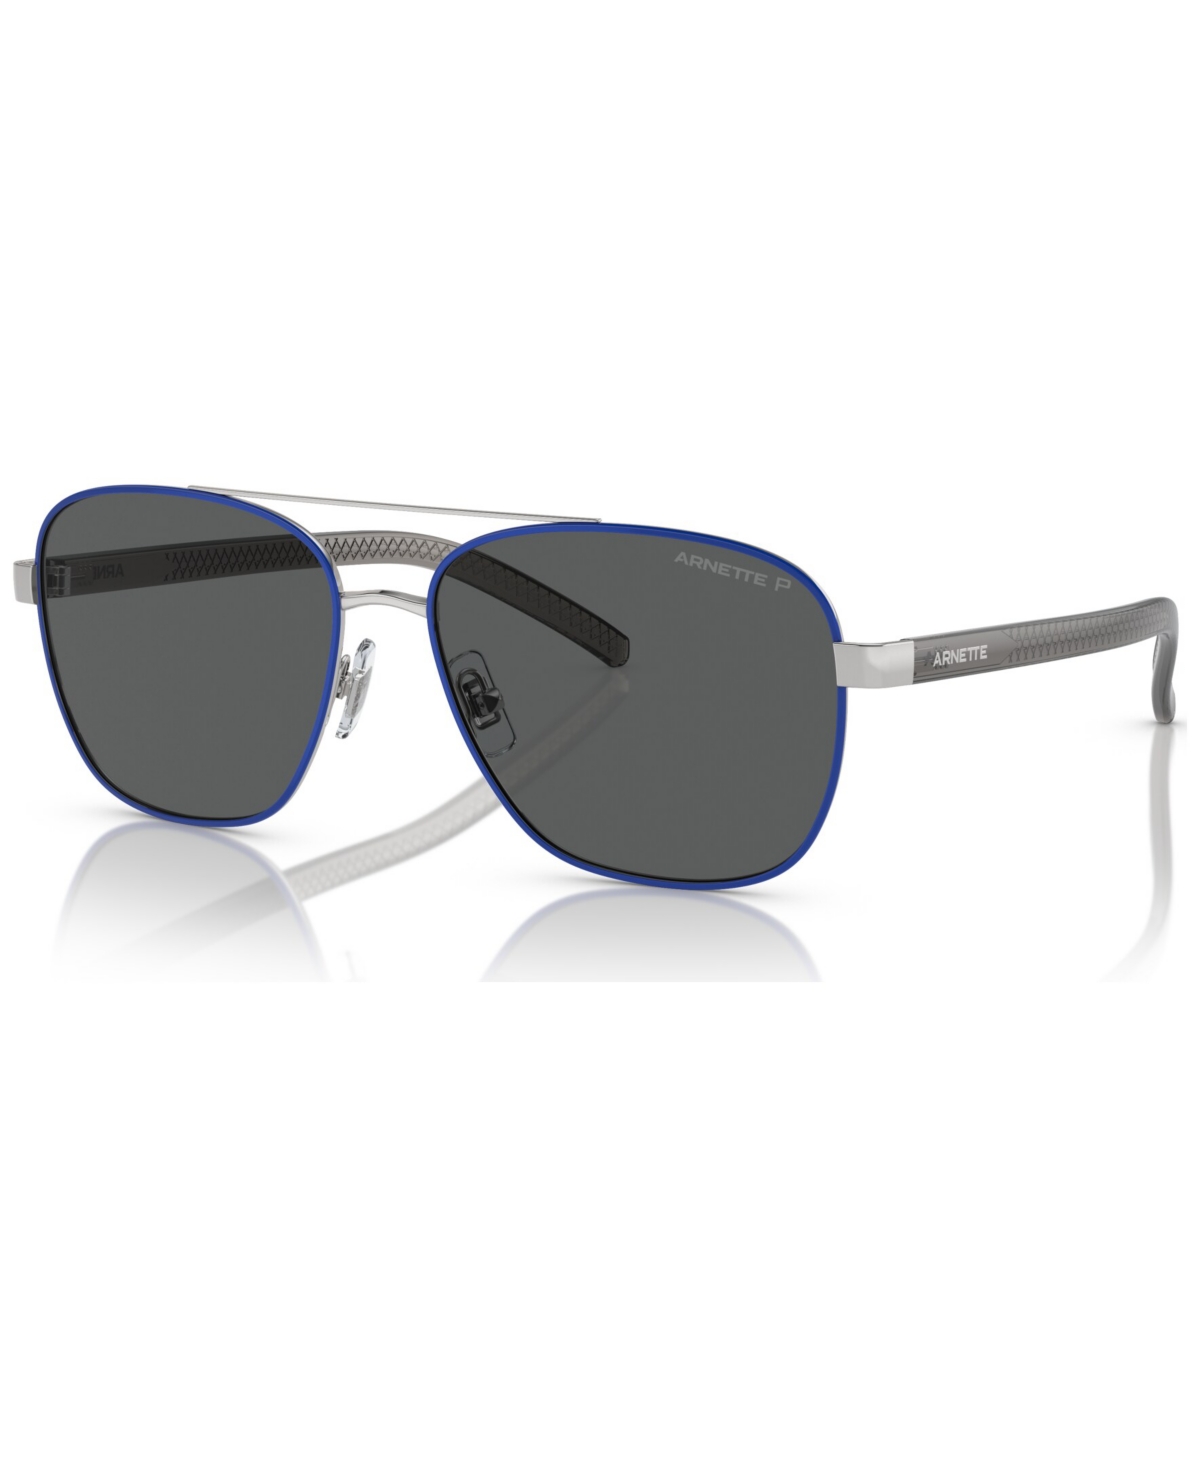 Men's Walvis Polarized Sunglasses, Polar AN3087 - Gunmetal, Black